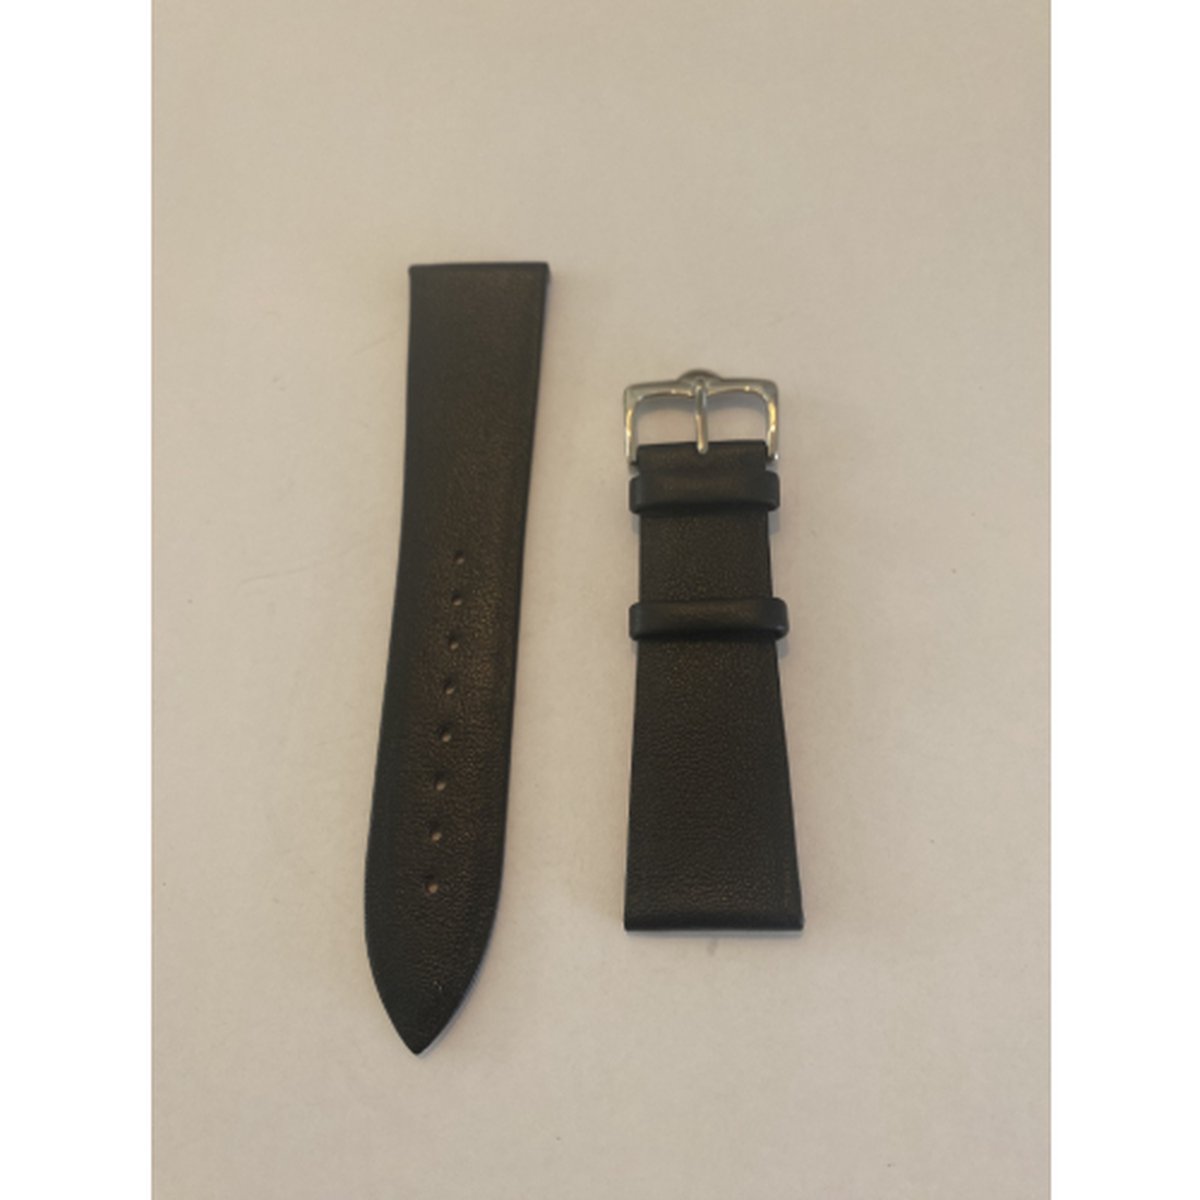 Horlogeband-model H1-dames-heren-24 mm breed-zwart-glad zonder stiksel-juweliers kwaliteit-anti allergisch